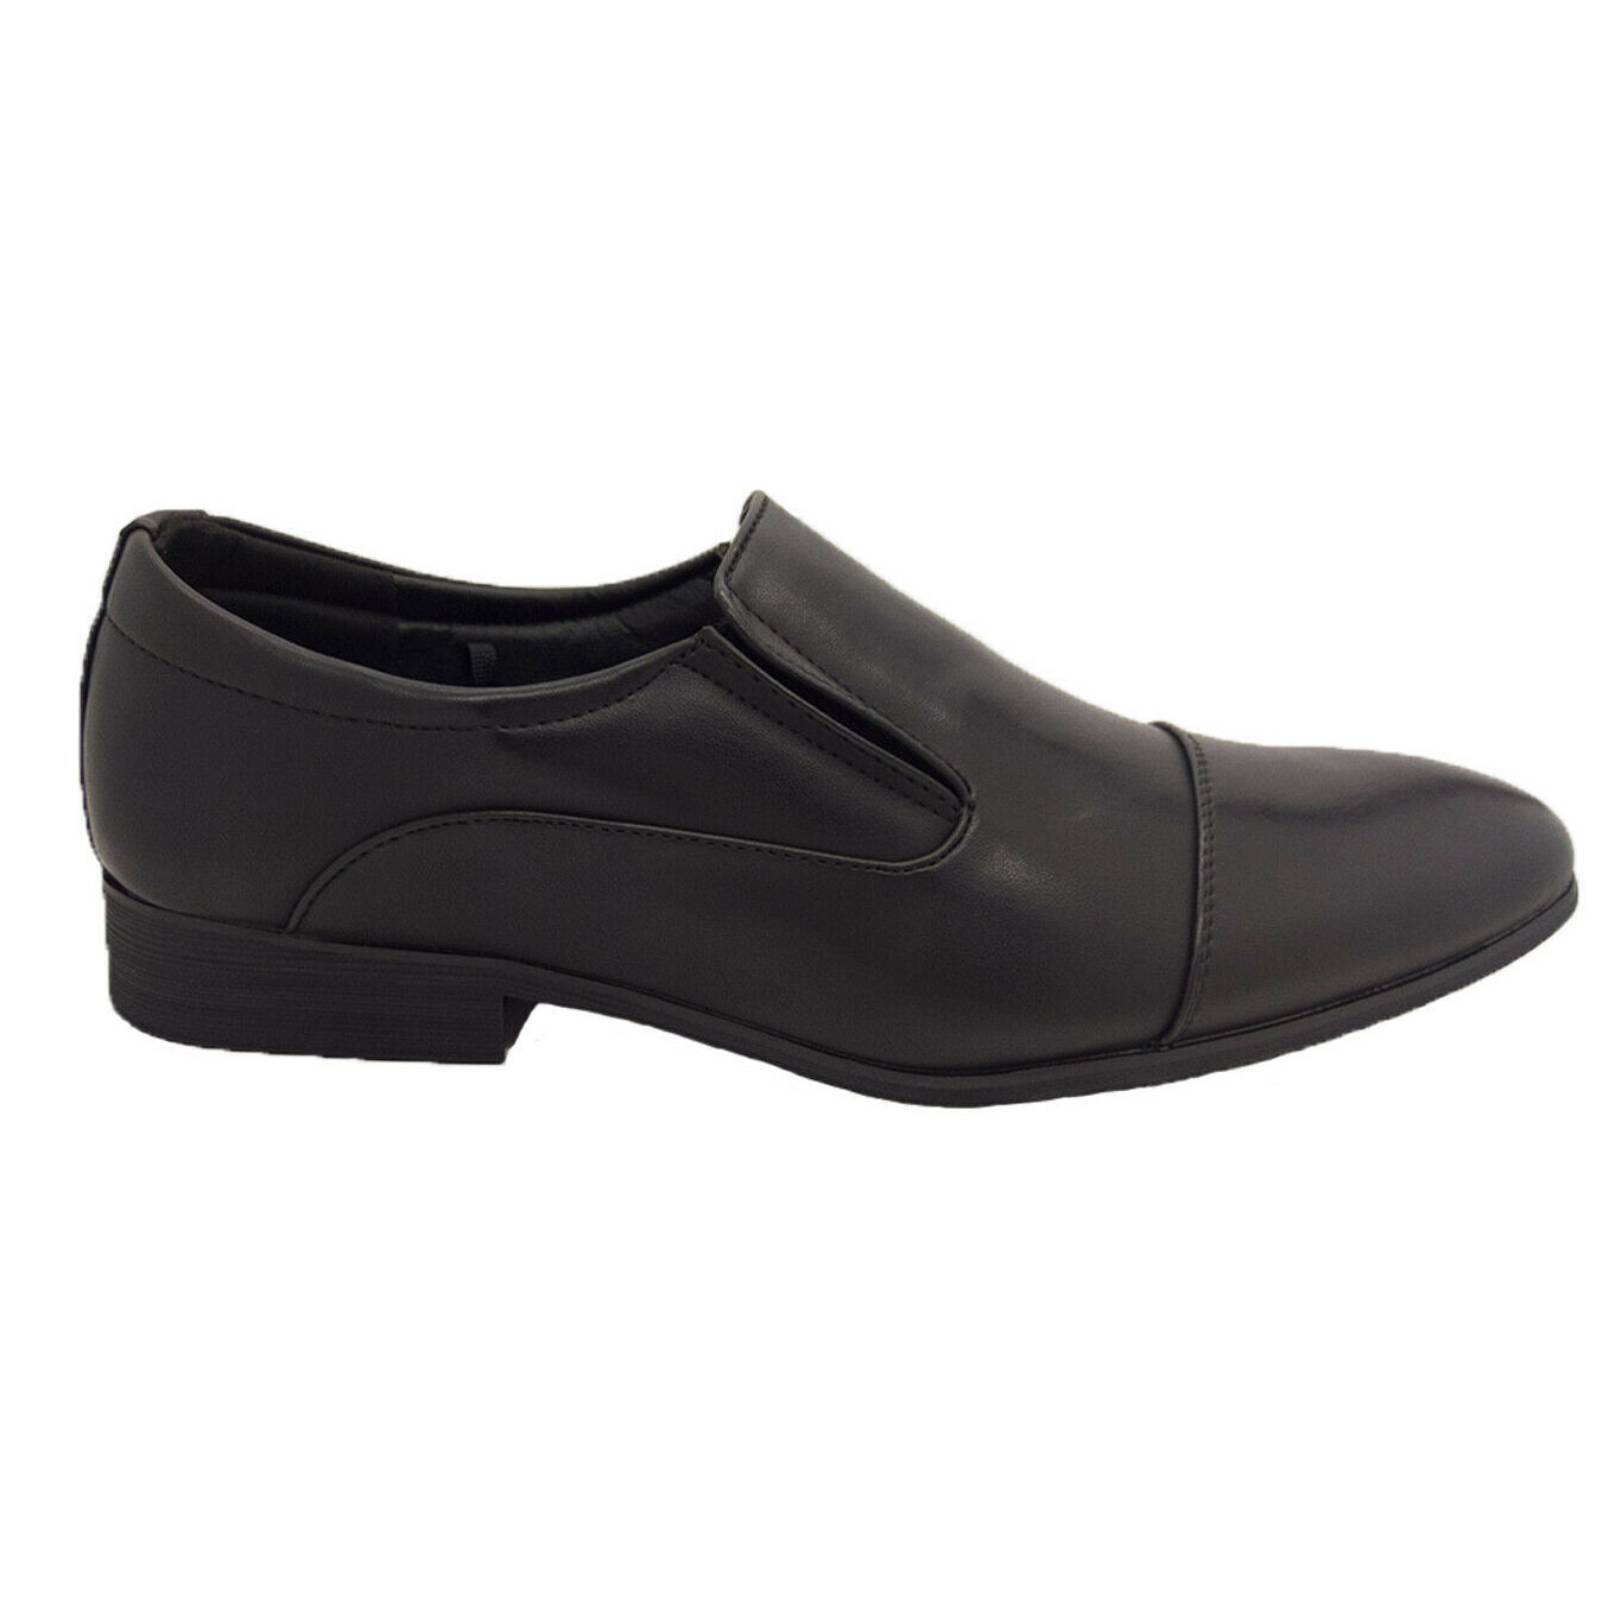 Grosby,Men's Antonio Slip On Vegan Leather Shoes Work Formal Dress - Black